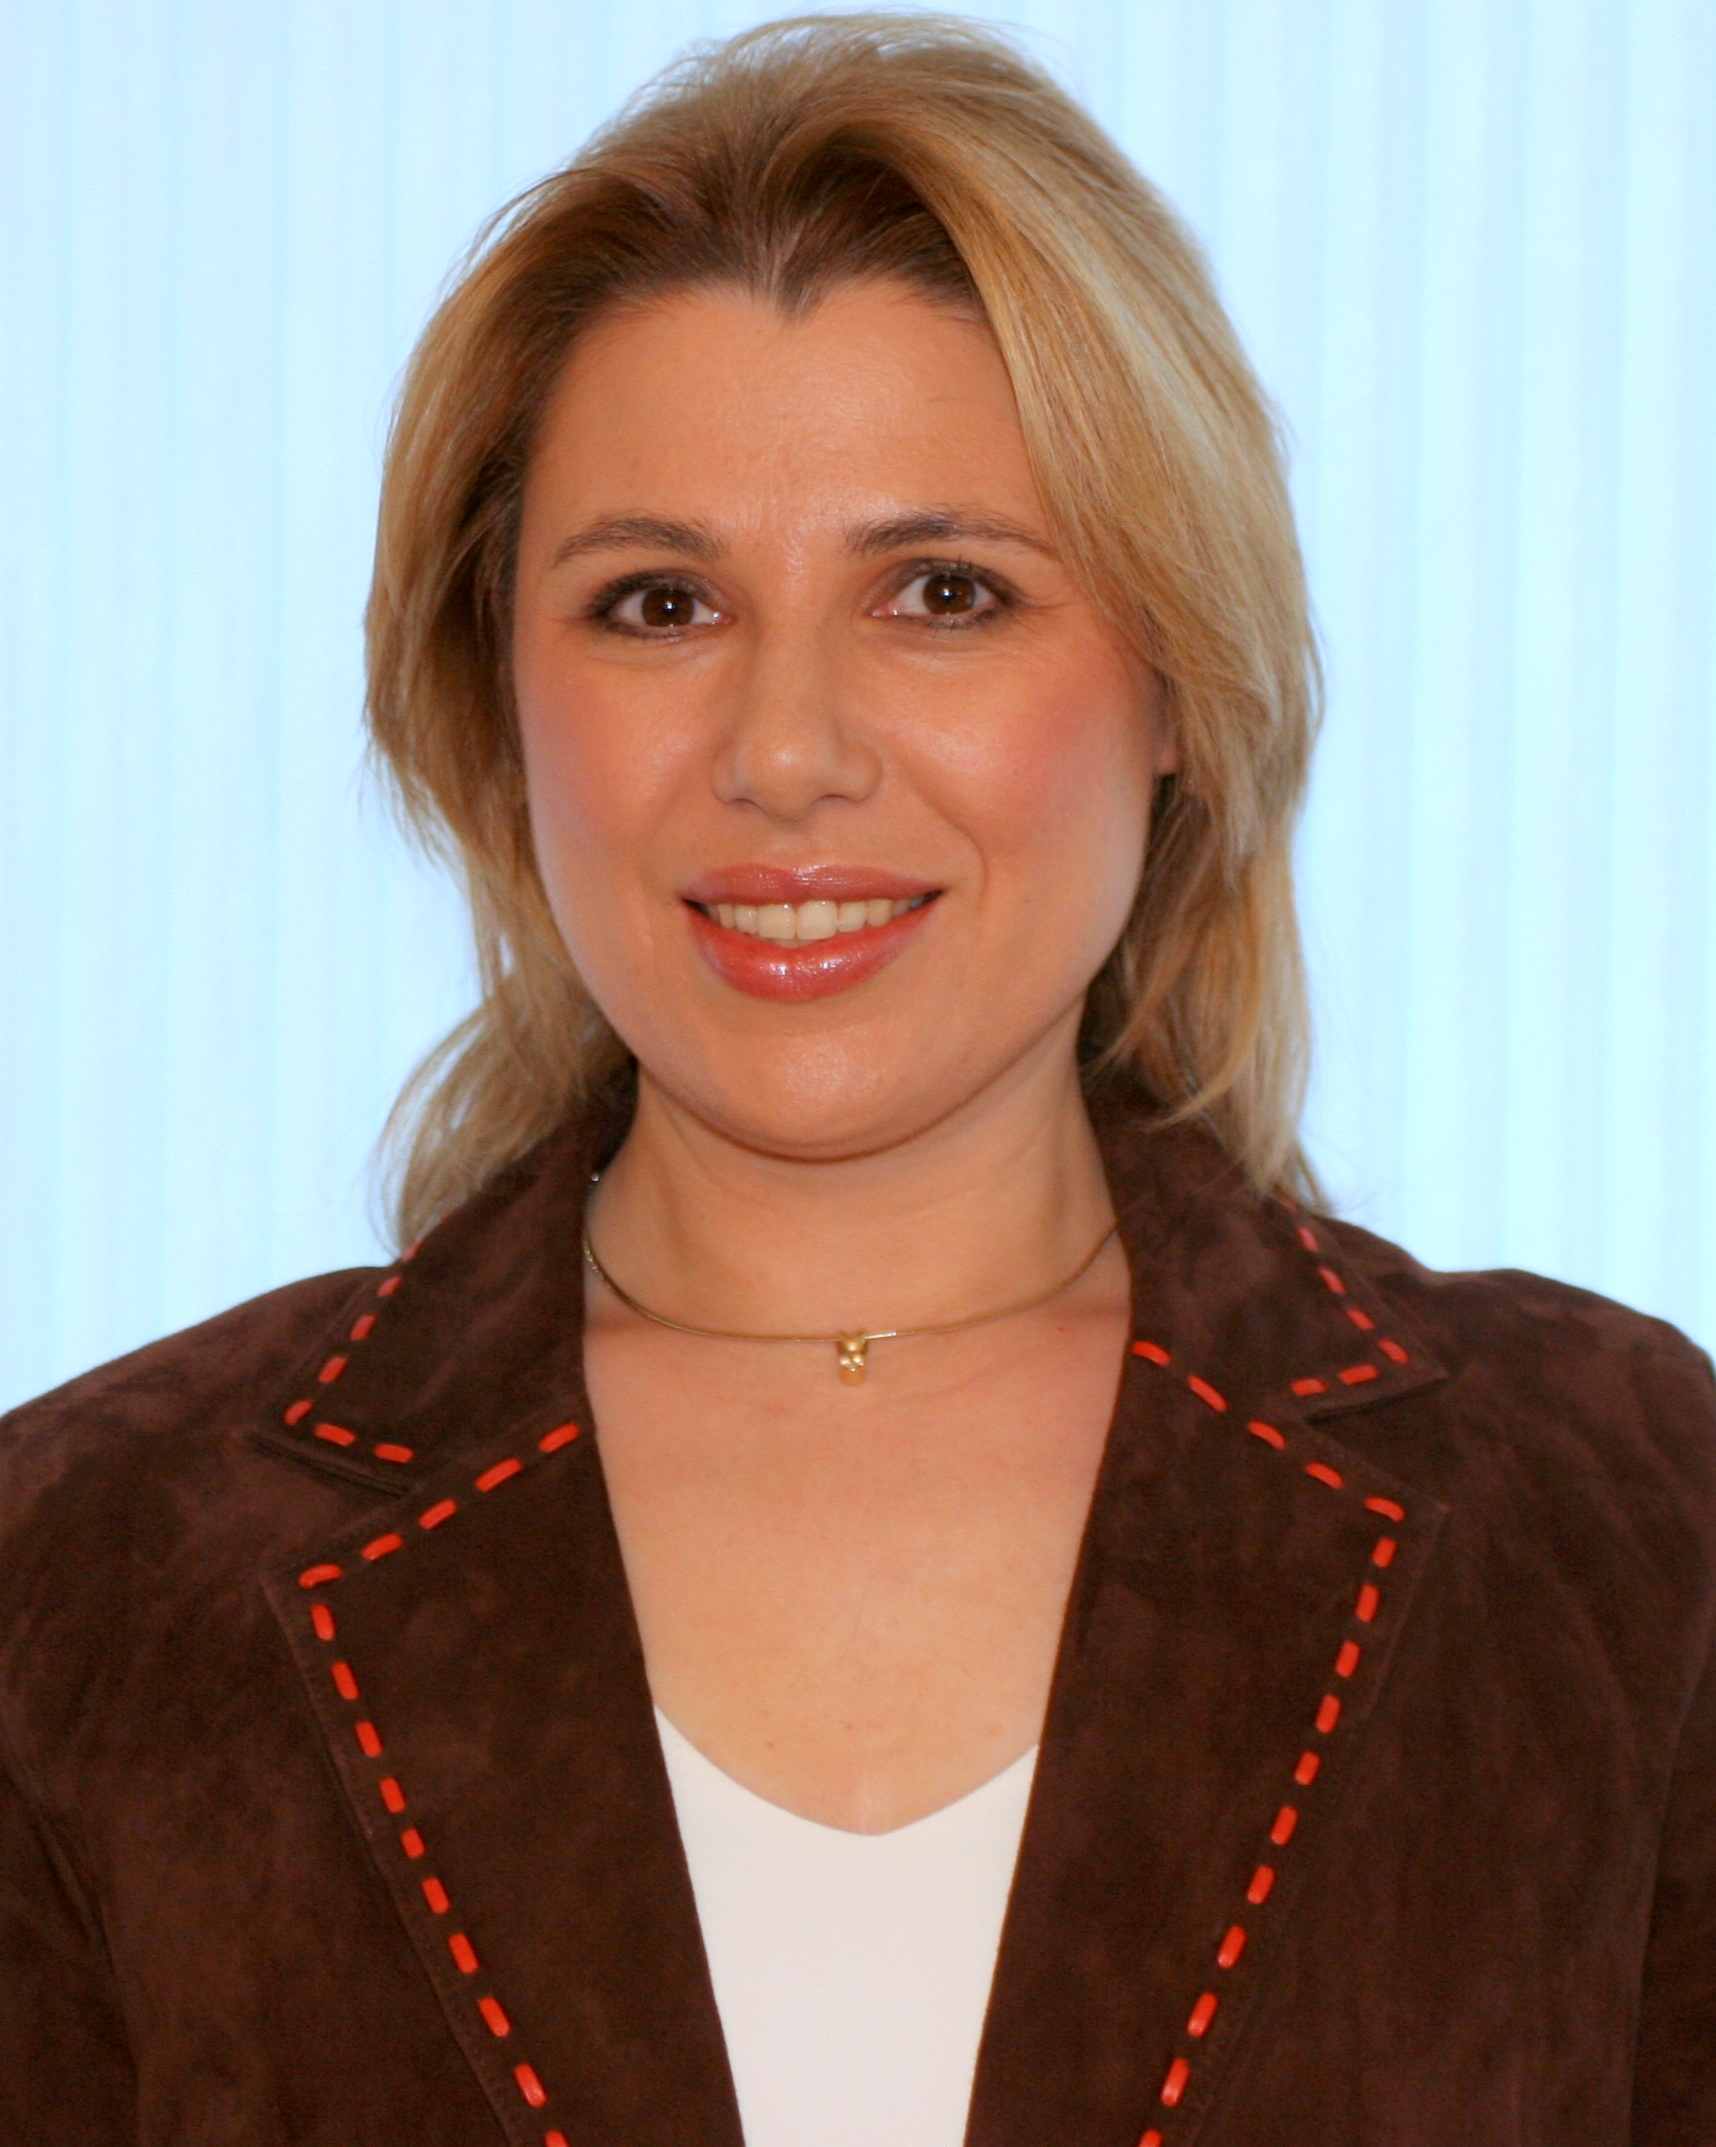 Susan Polgar in 2006